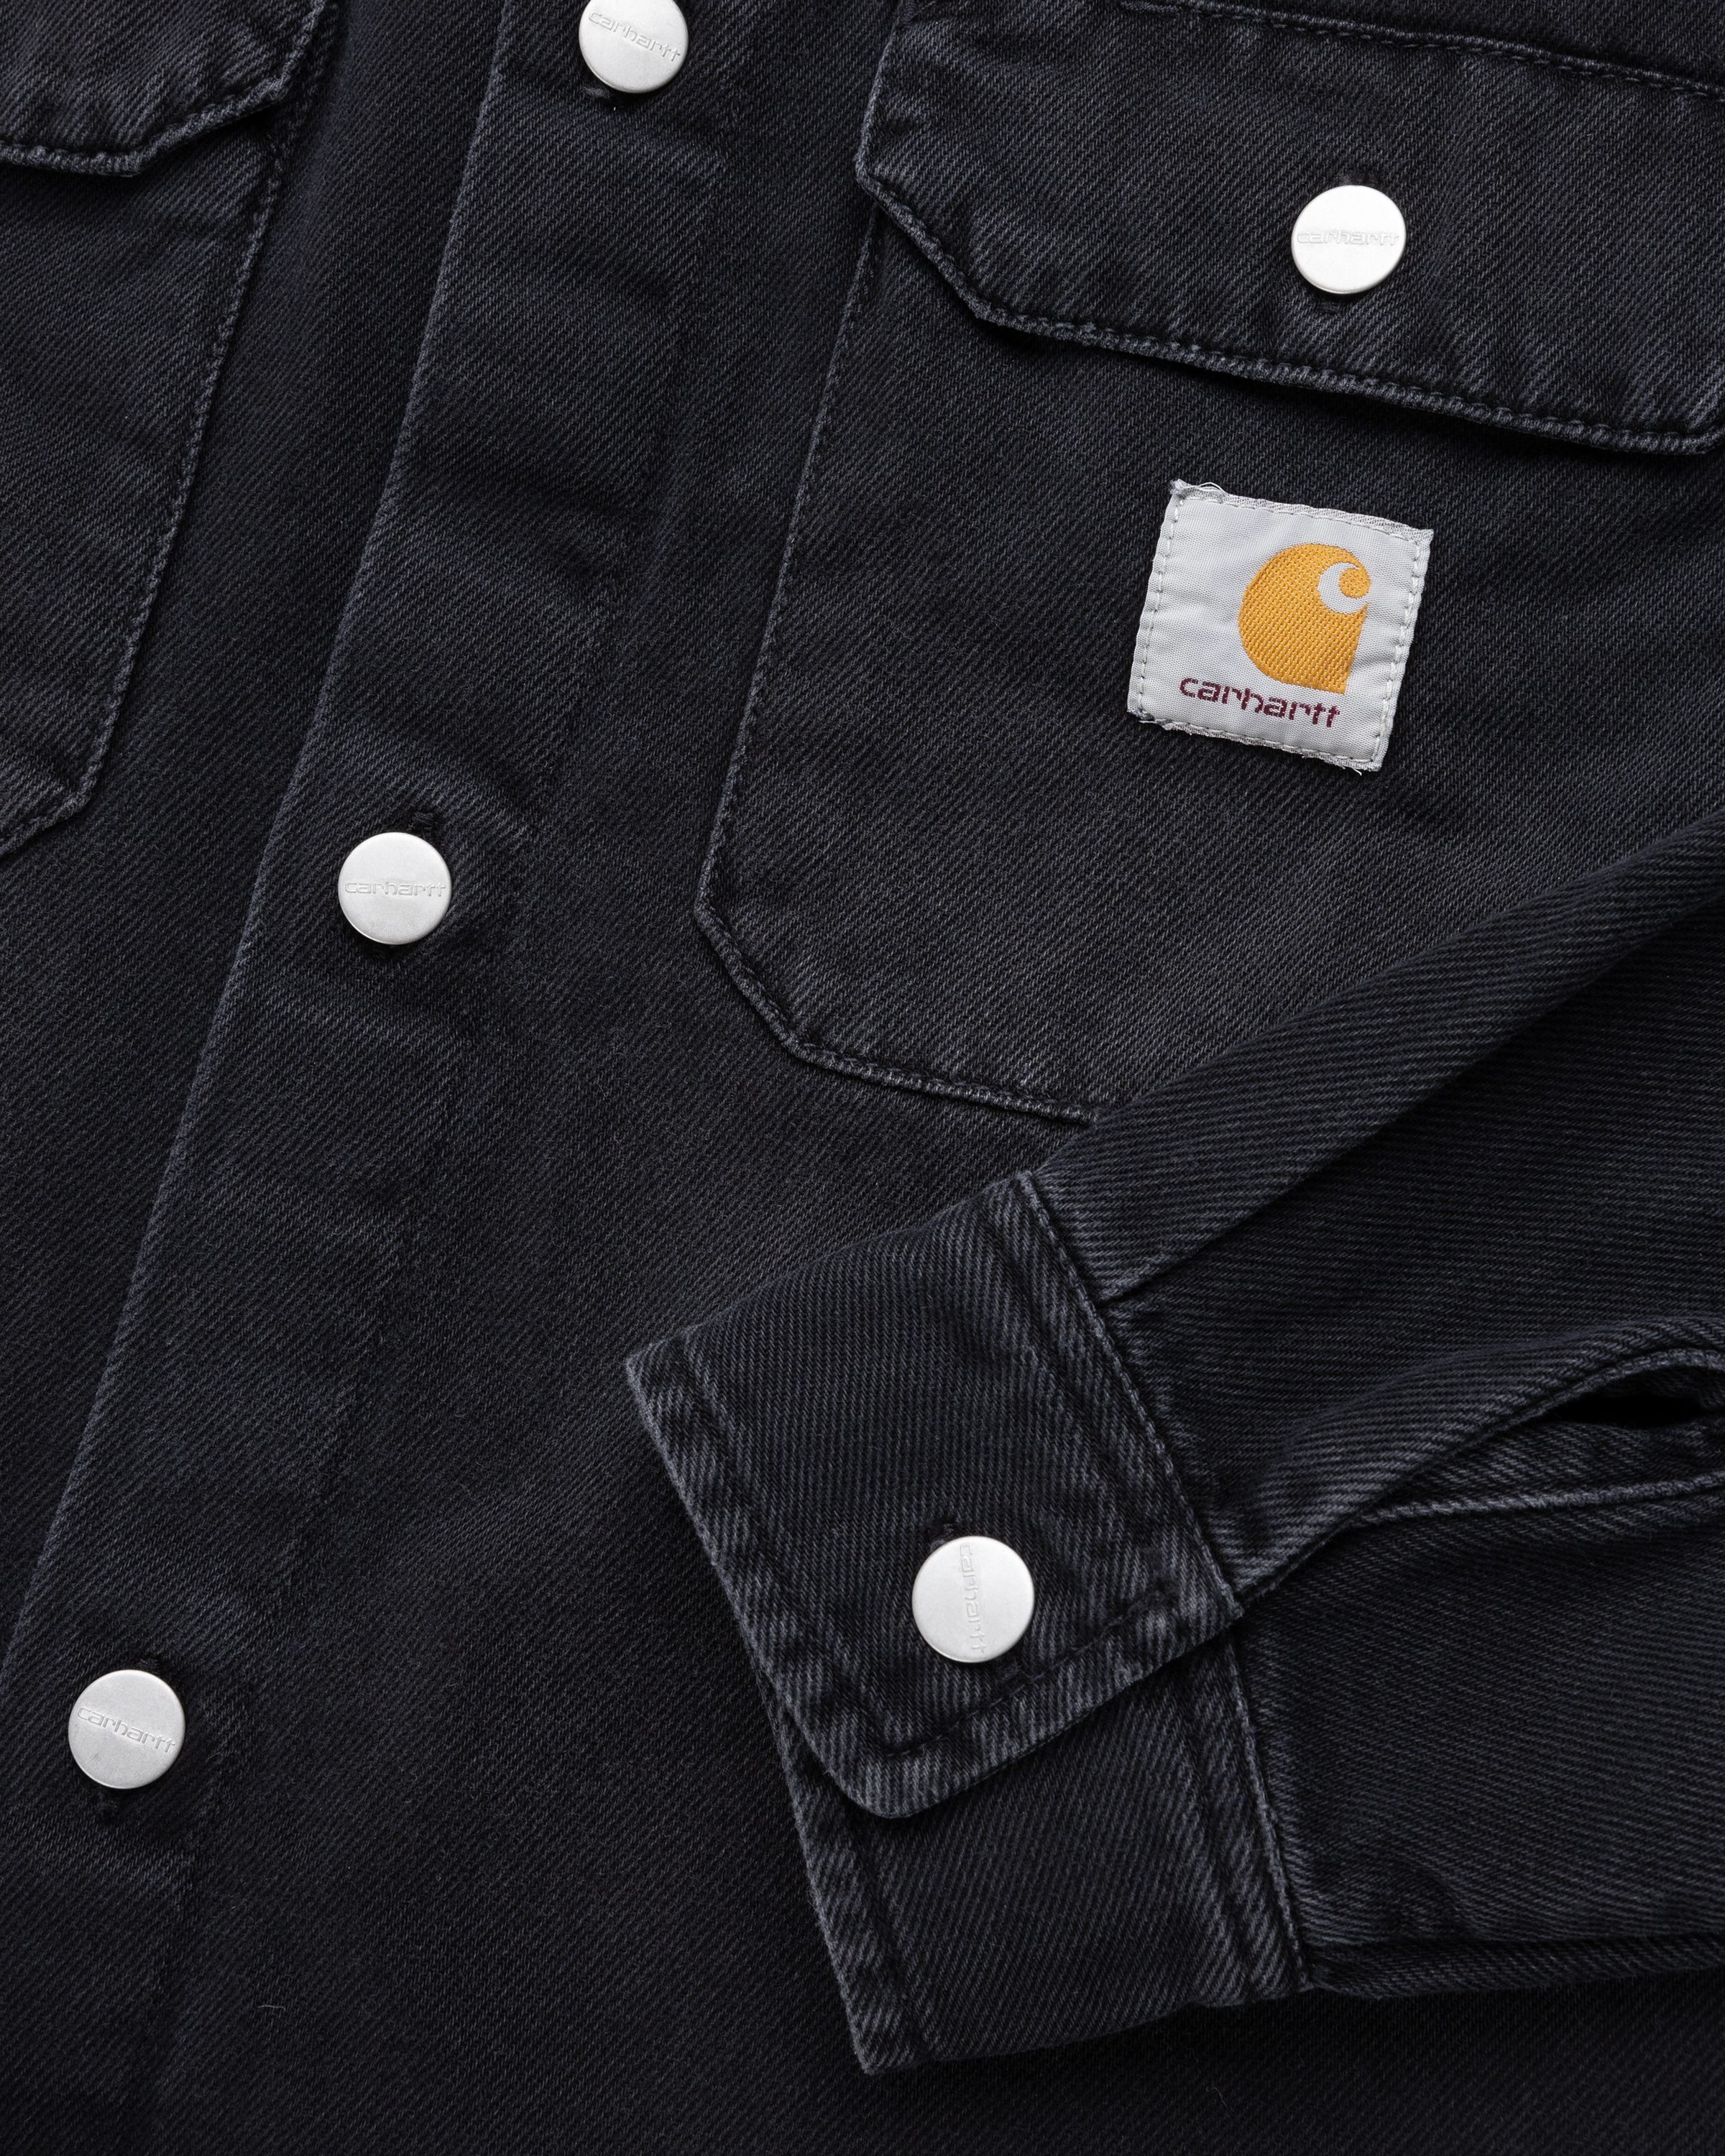 Carhartt WIP – Harvey Shirt Jacket Black/Dark Used Wash - Shirts - Black - Image 7